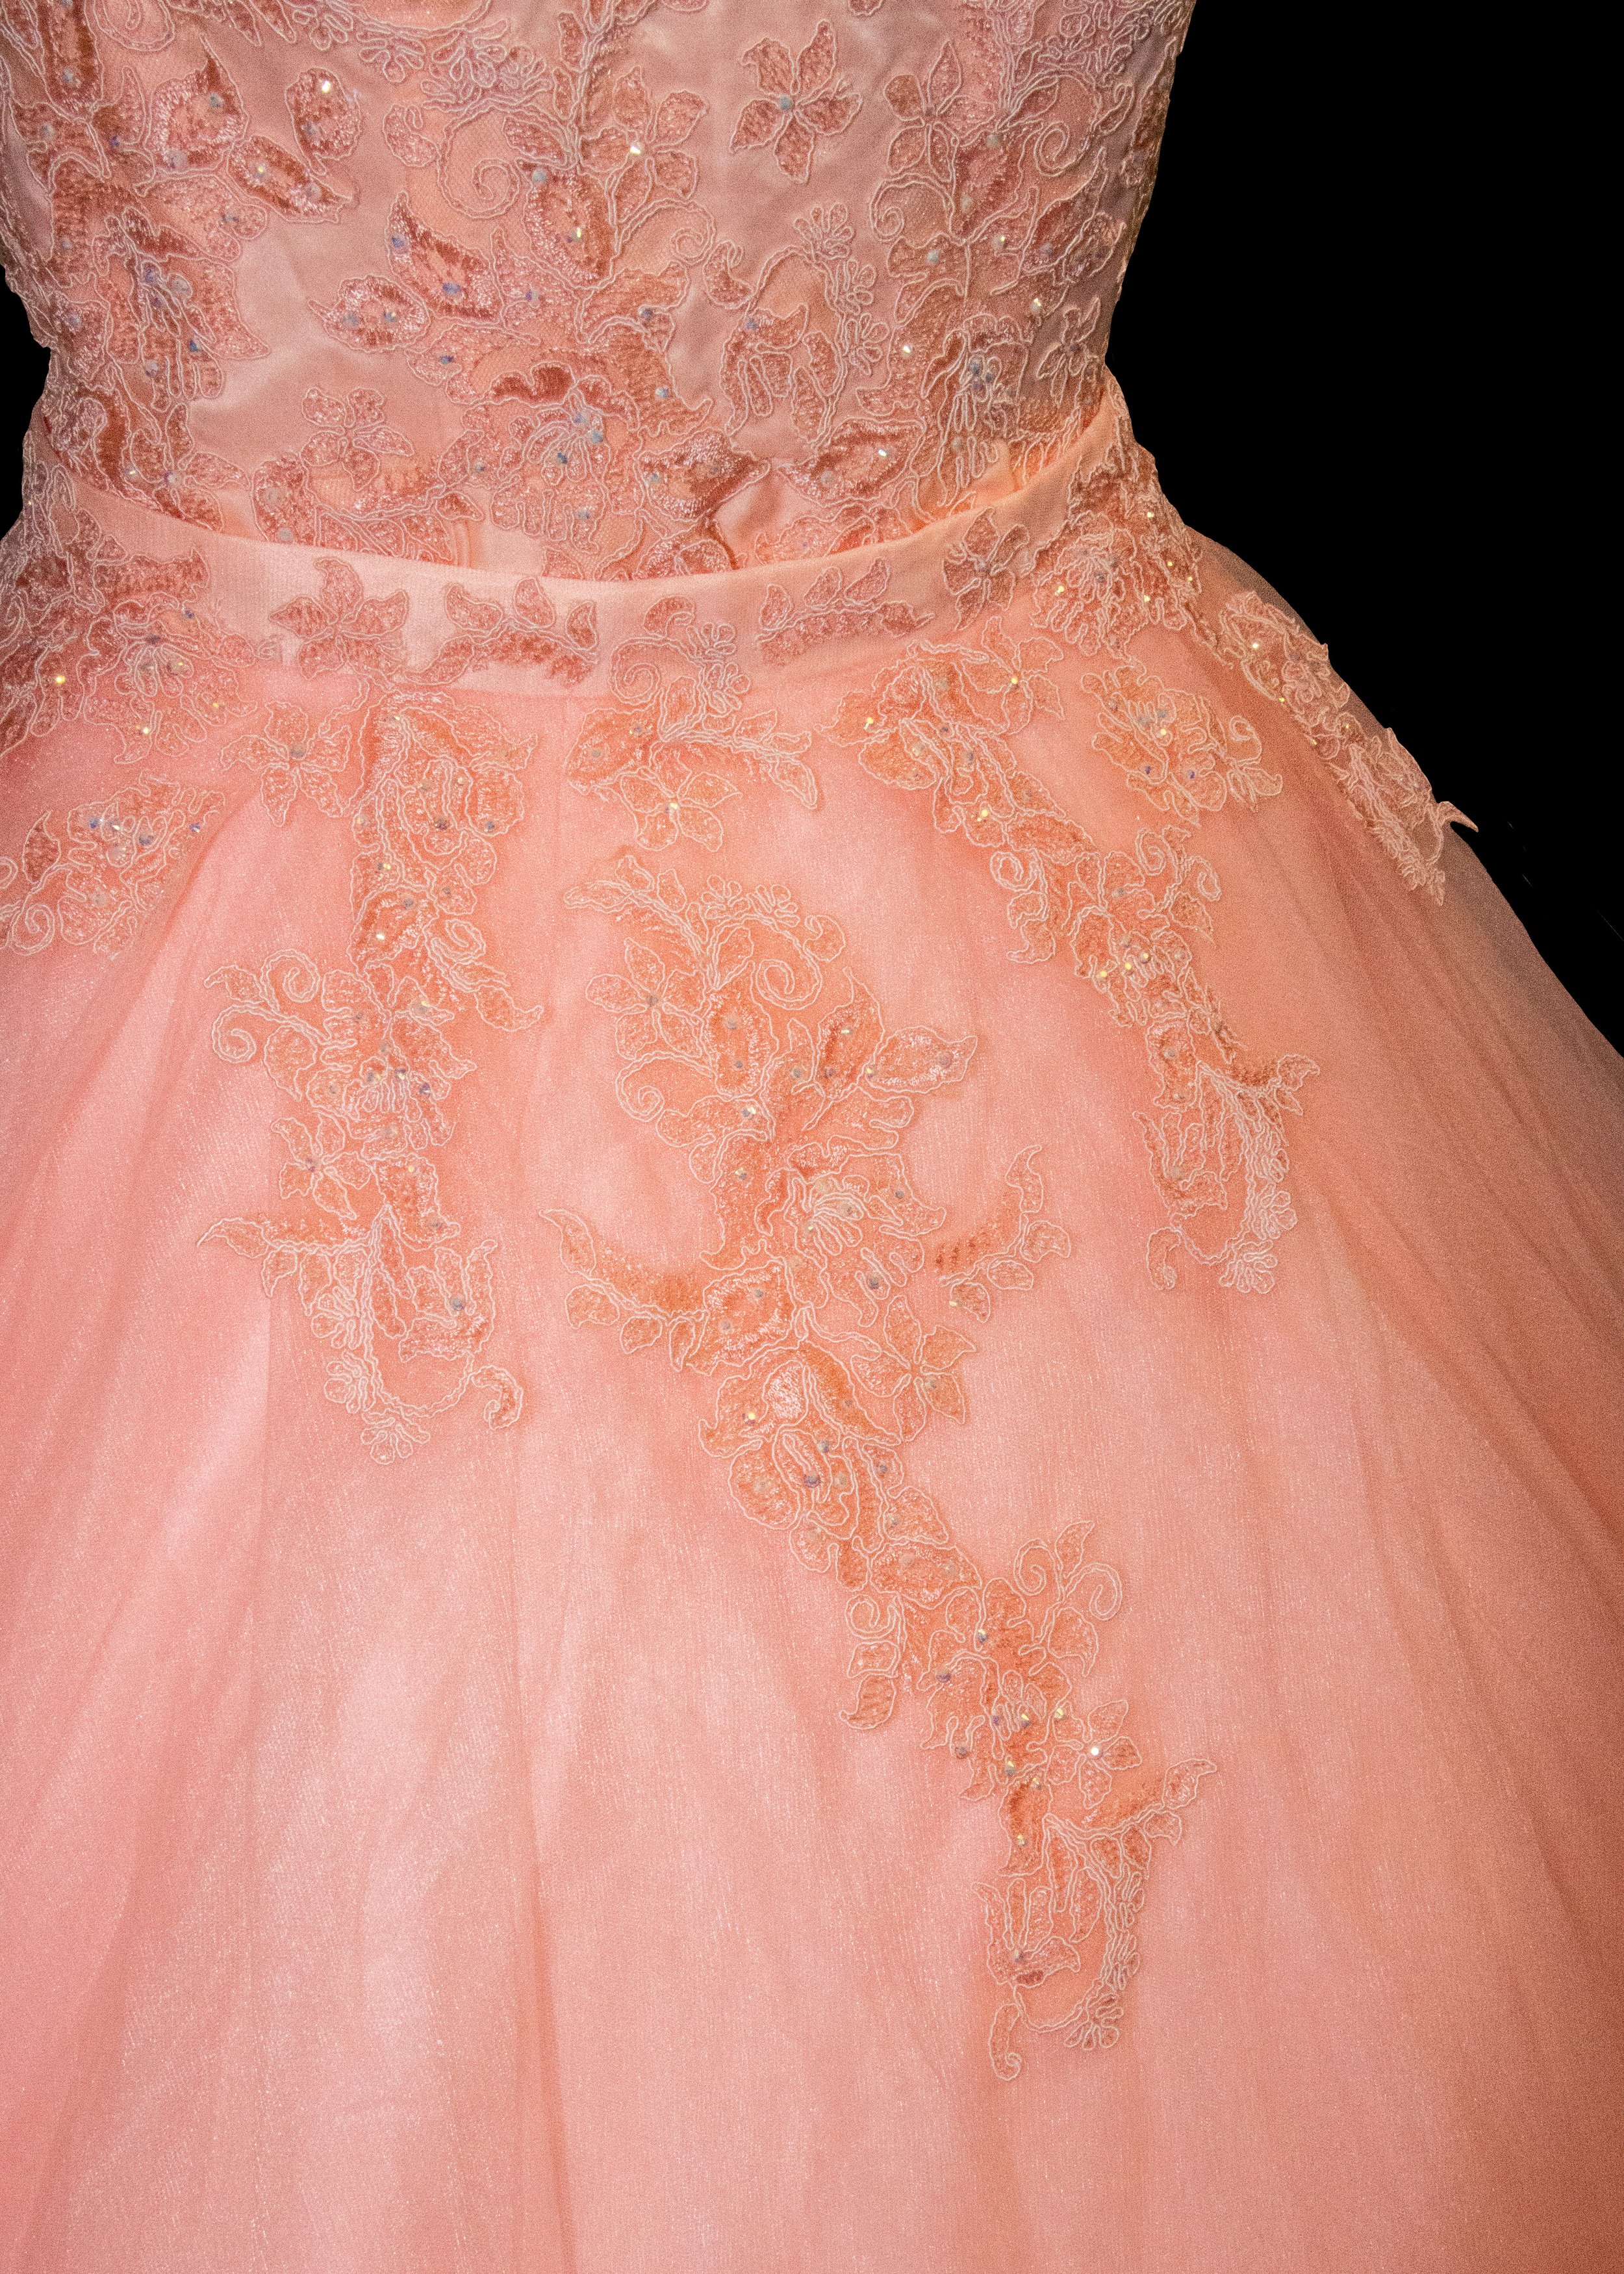 Dark Pink Dress C.jpg